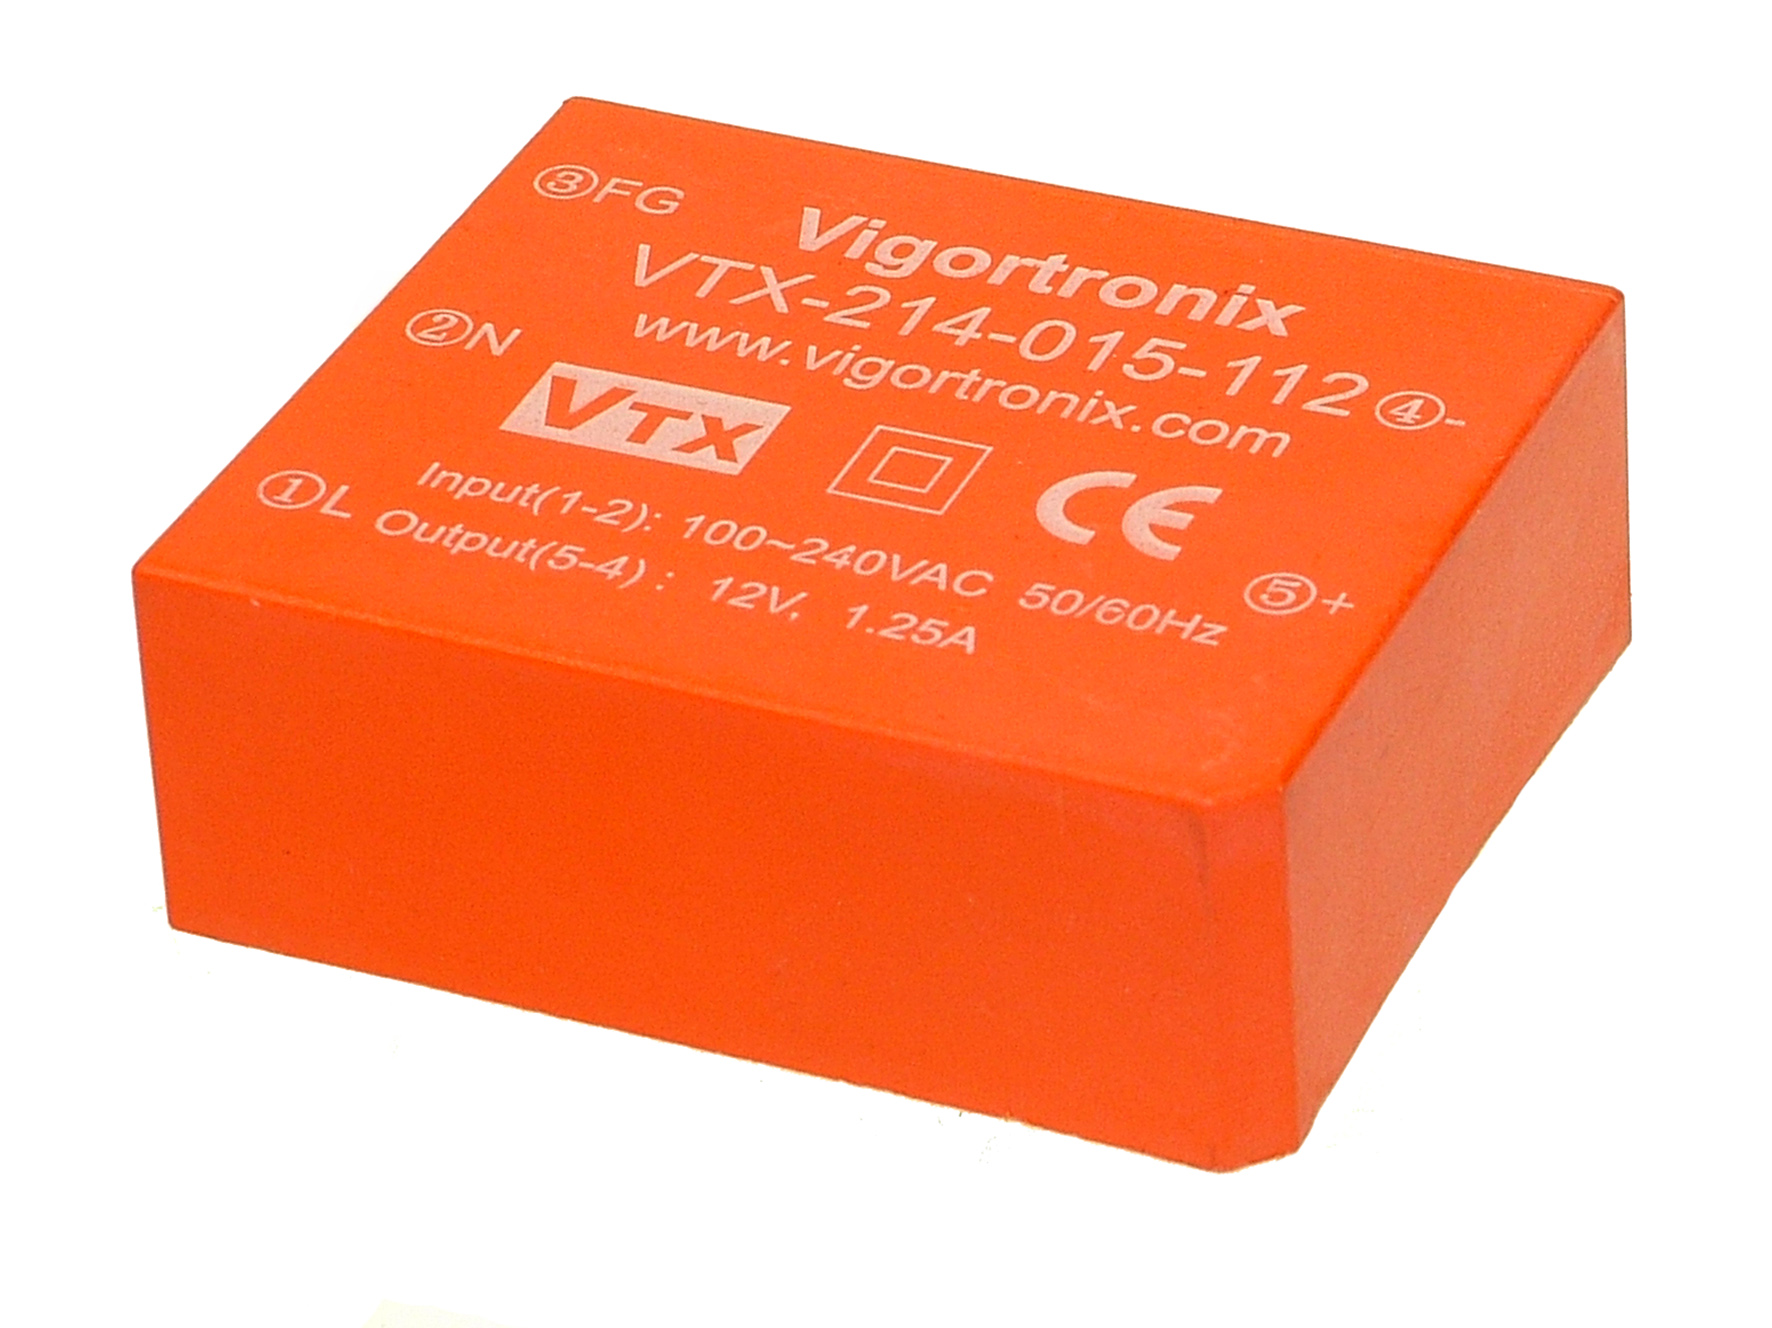 Vigortronix VTX-214-015-1 AC-DC Converter 15 Watt